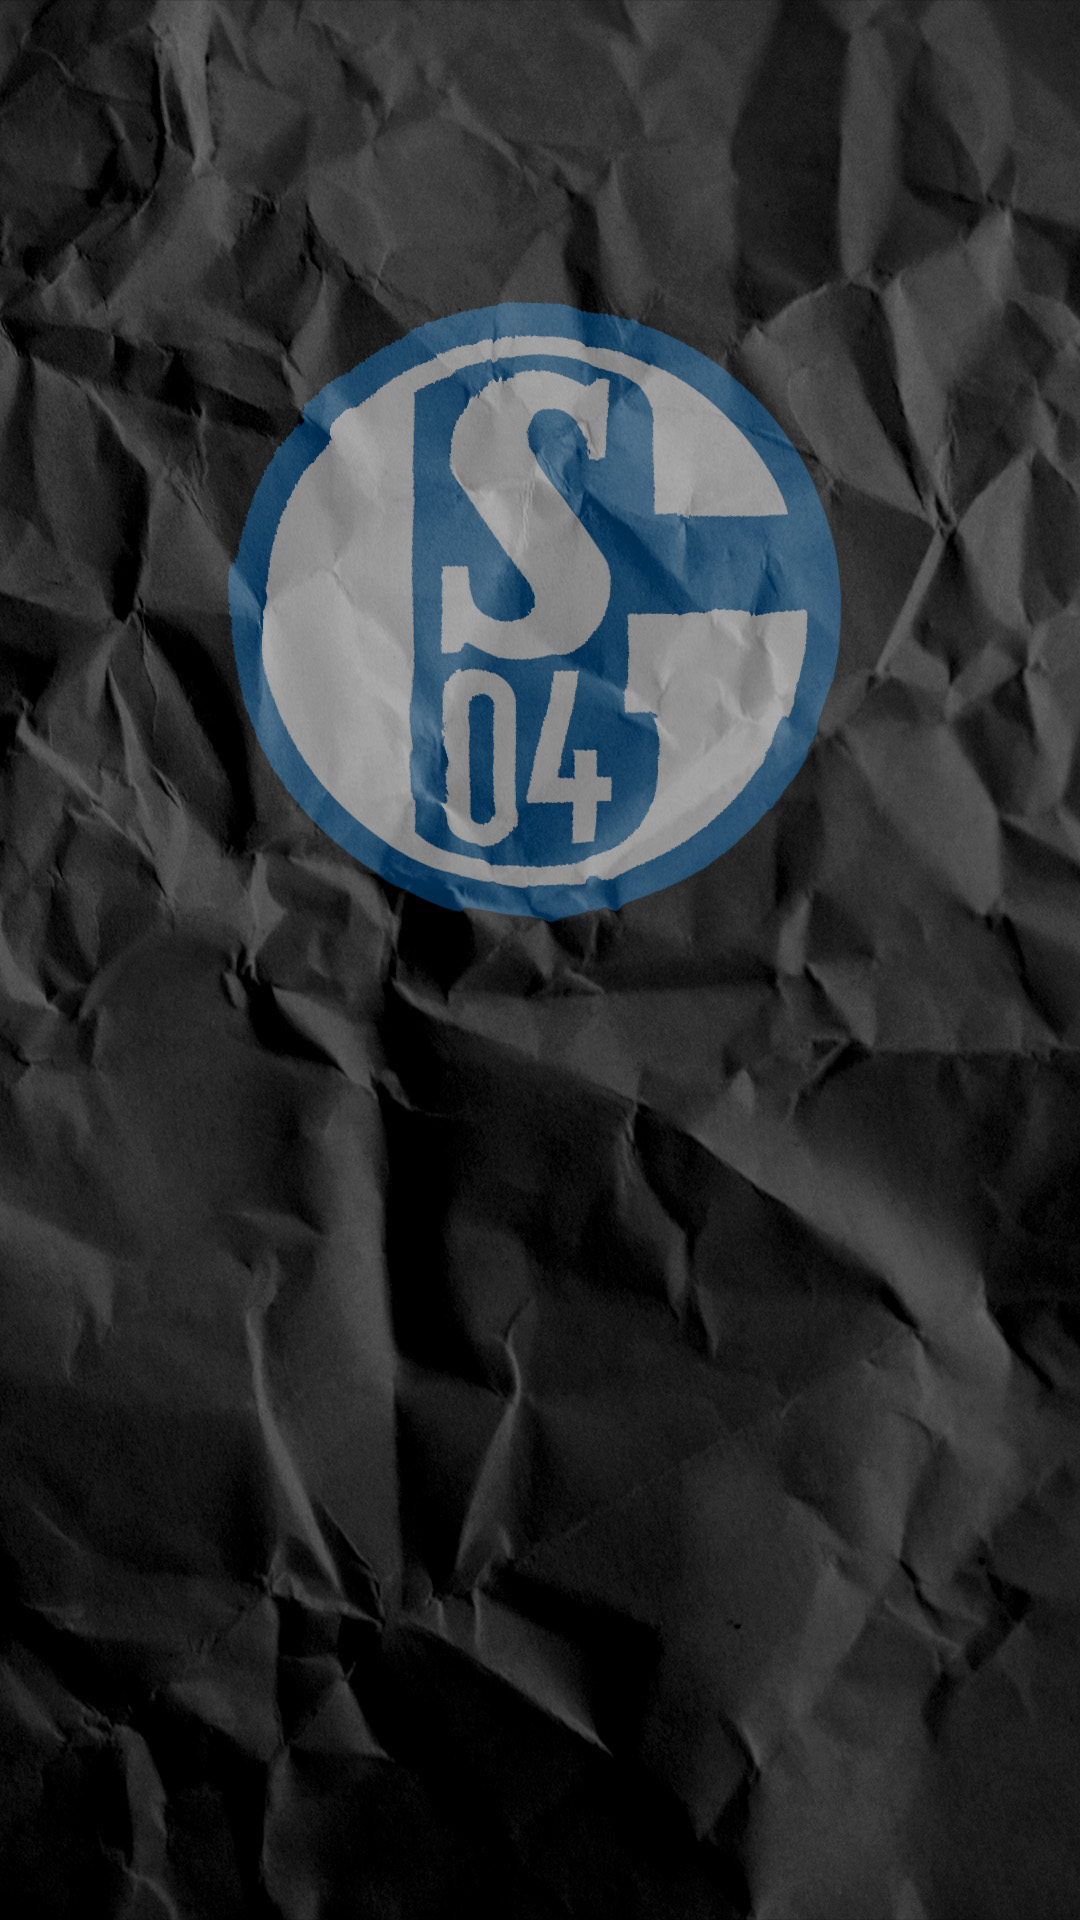 Fc Schalke 04 - Crumpled Paper Texture Photoshop , HD Wallpaper & Backgrounds